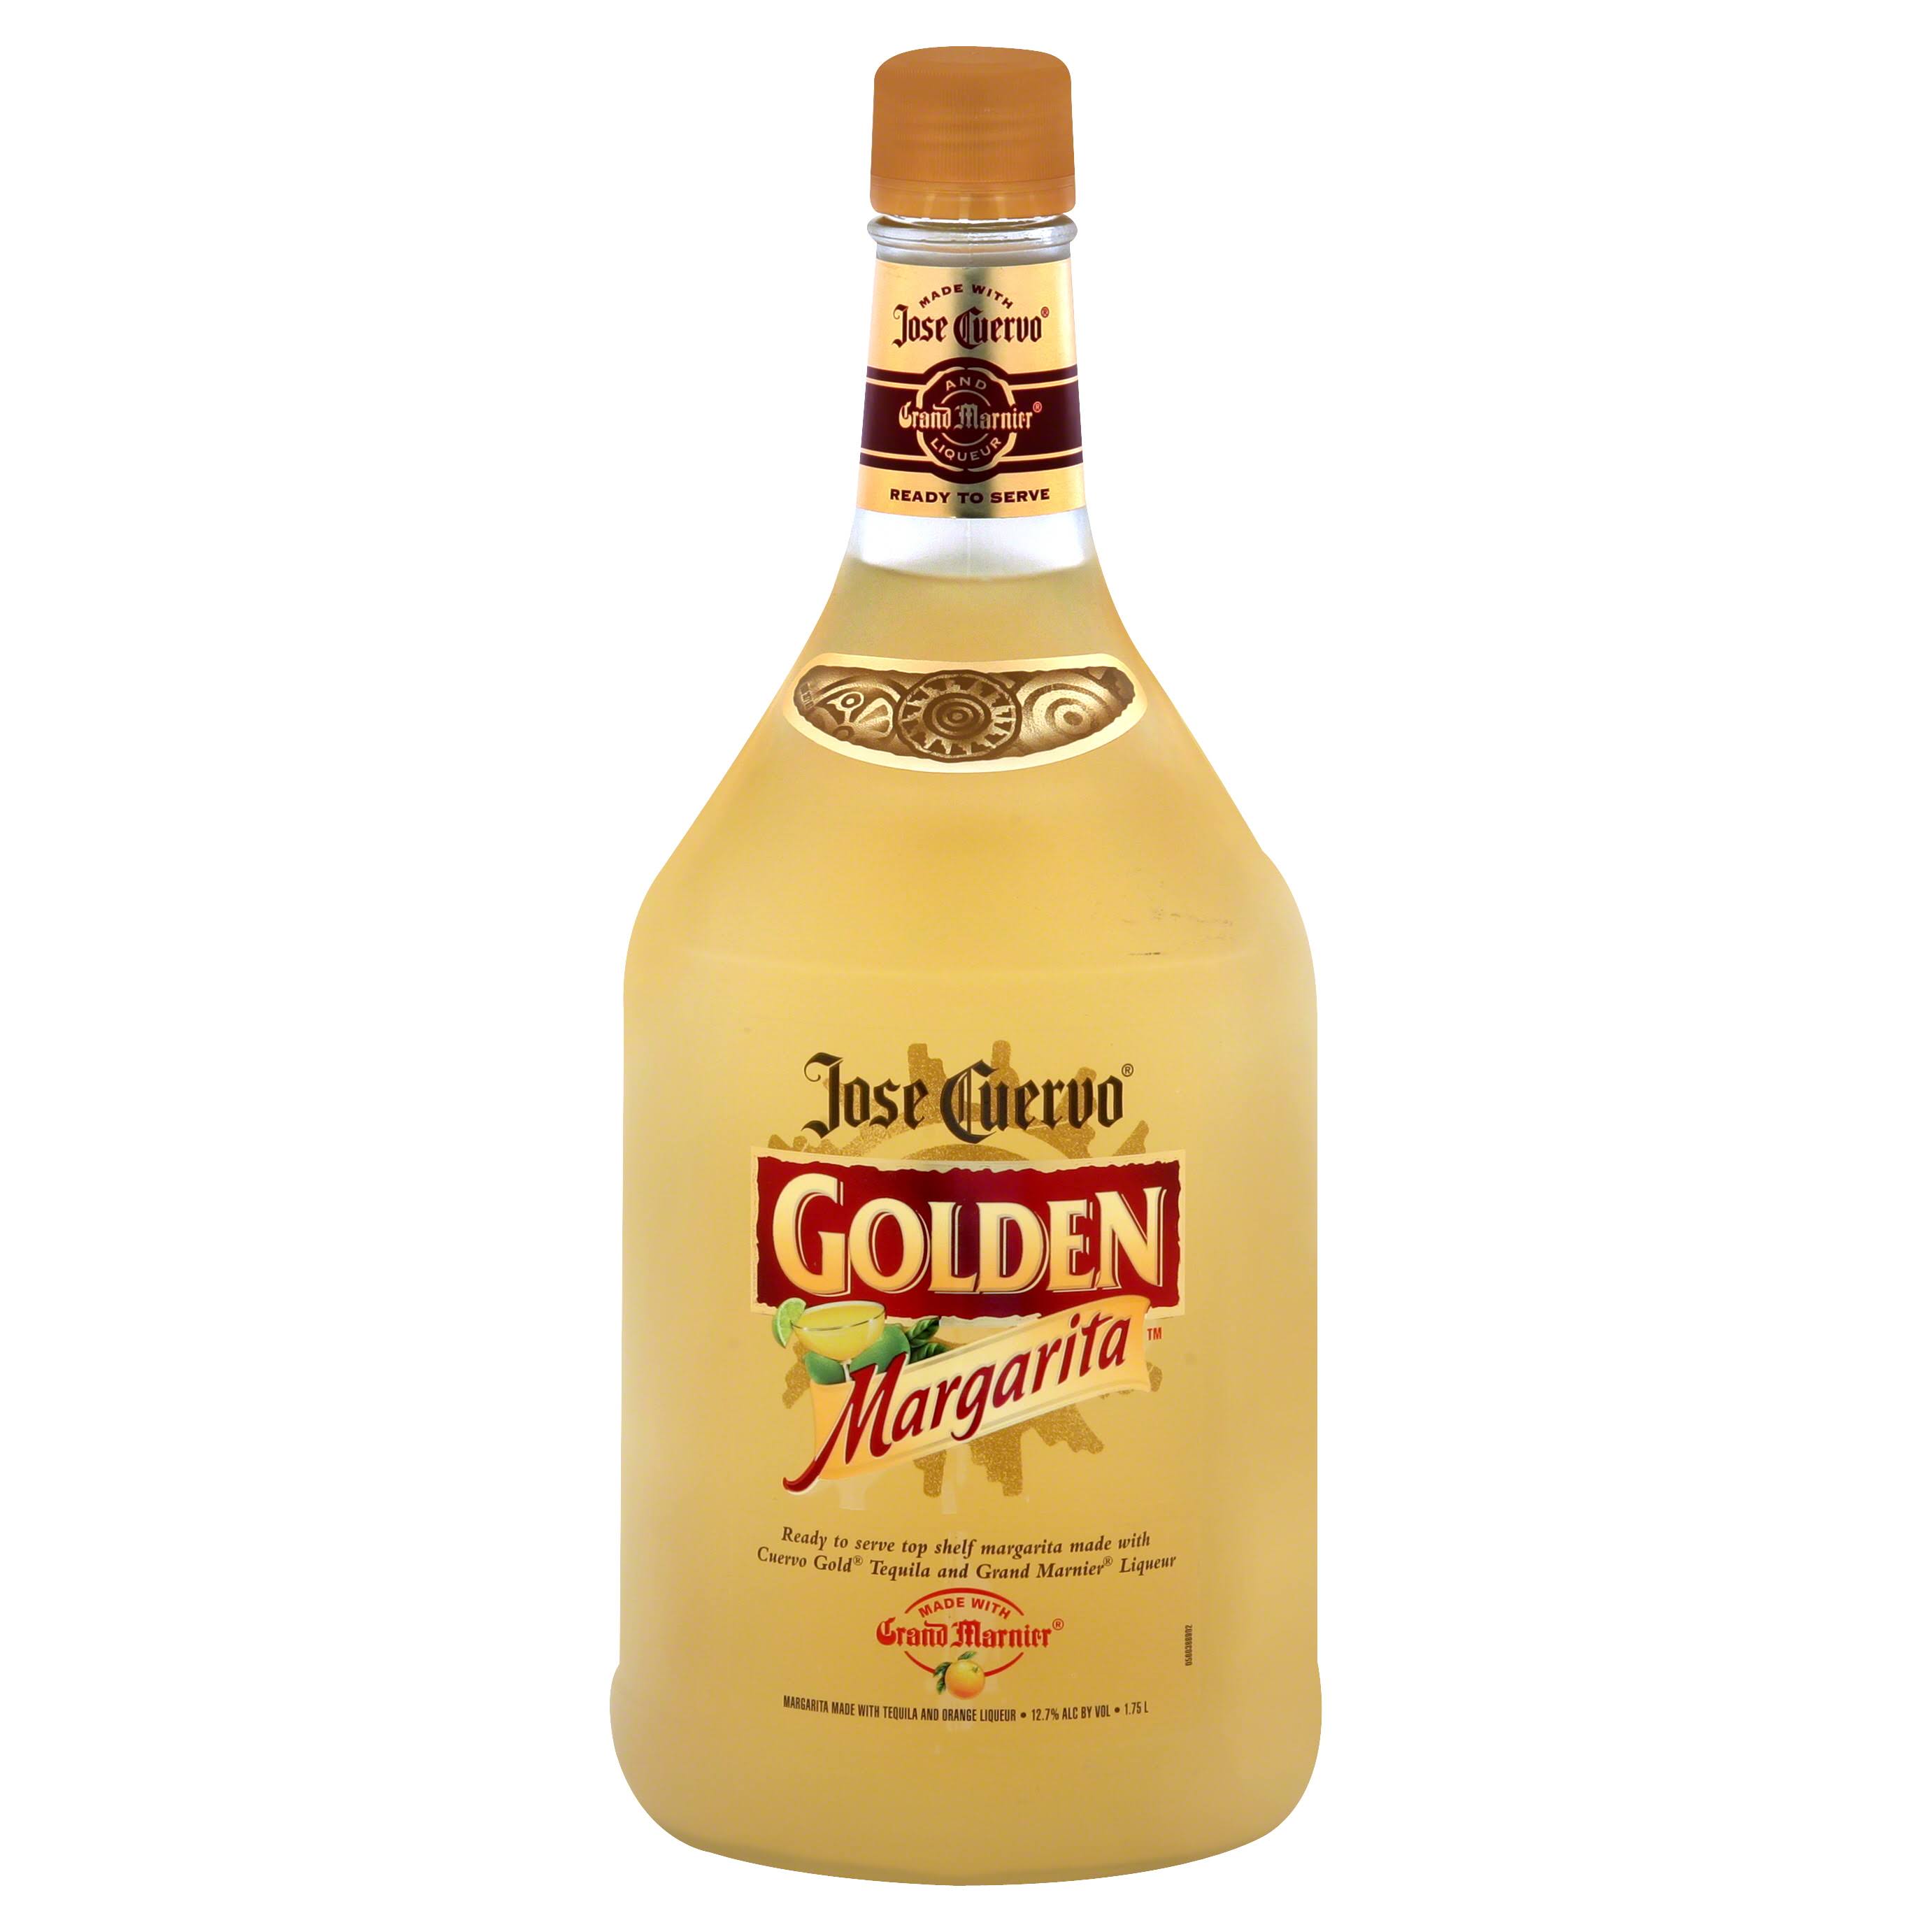 Jose Cuervo Golden Margarita - 1.75 L bottle